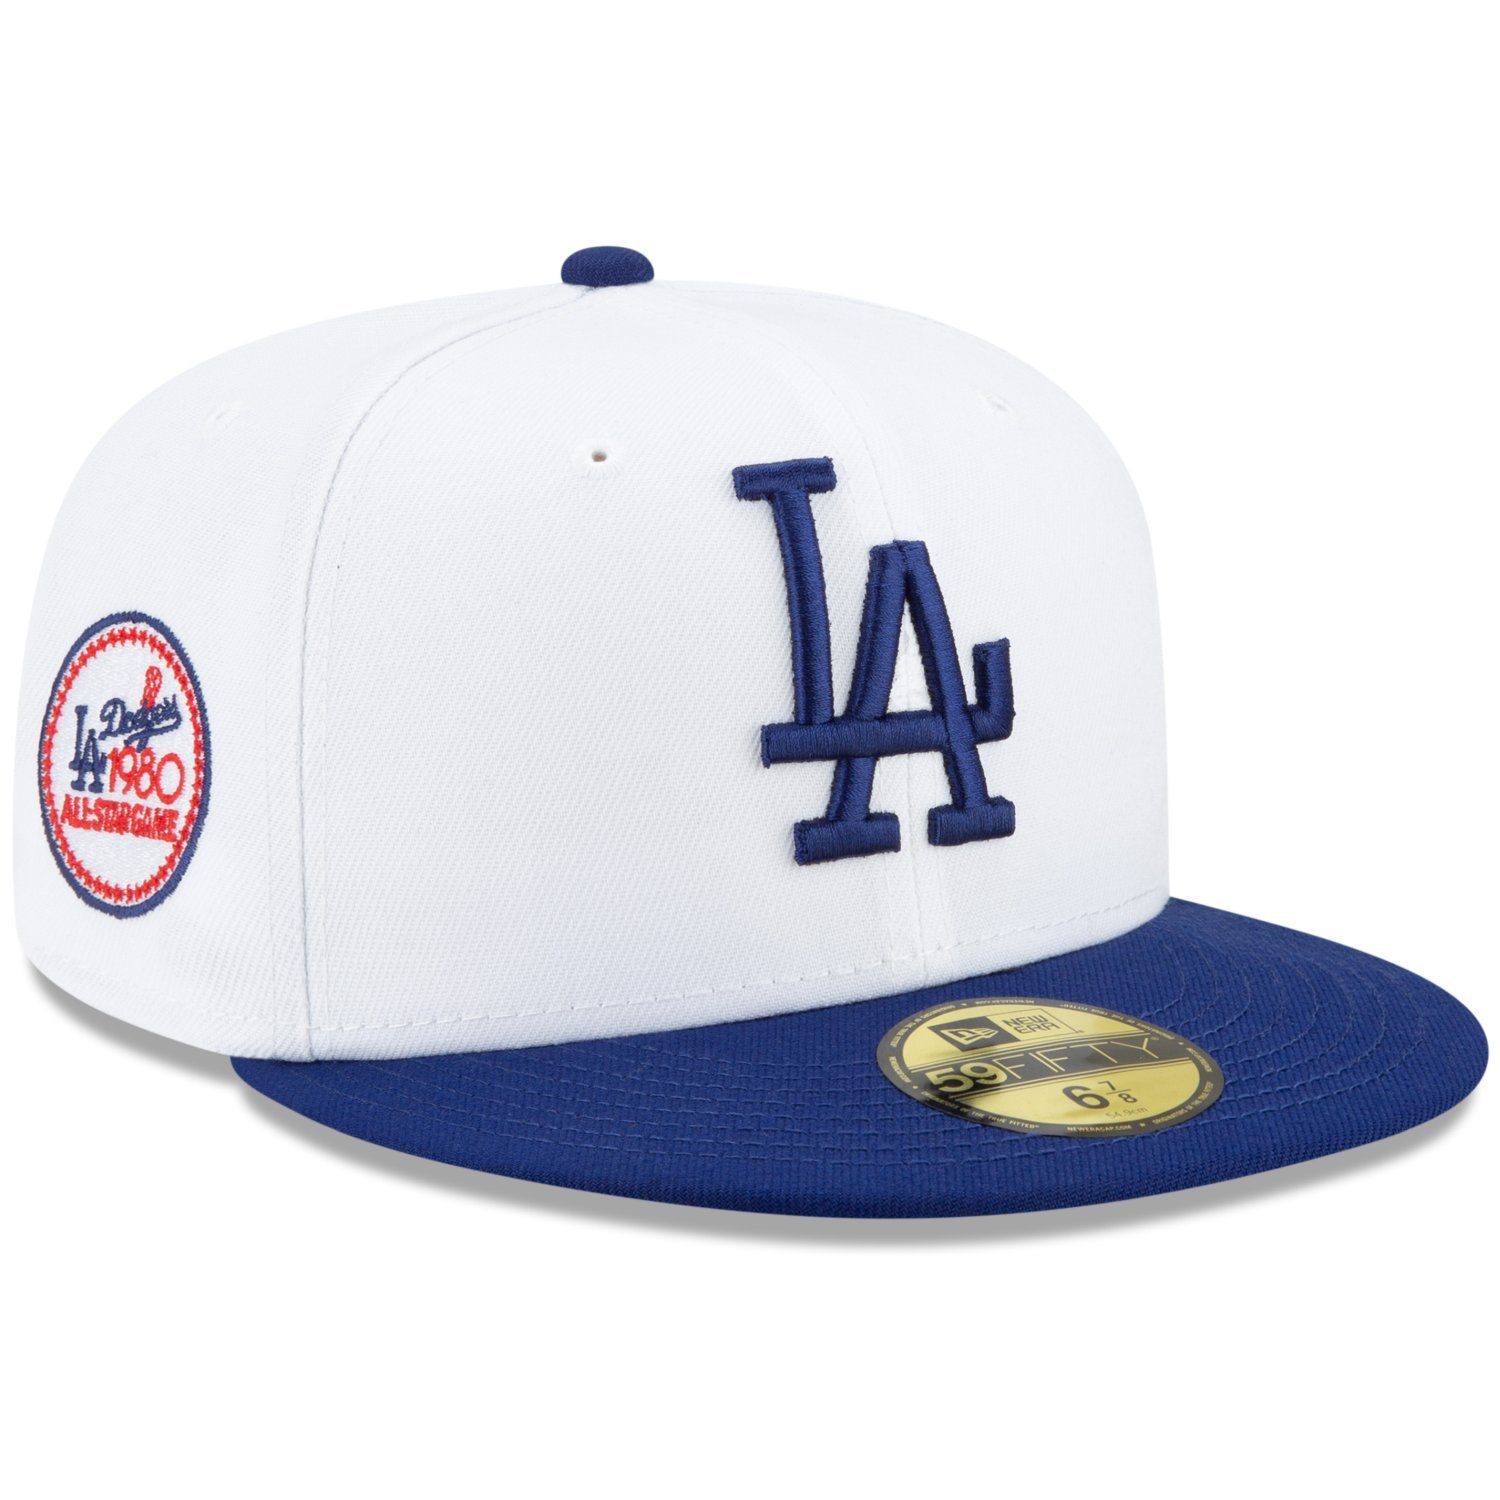 New Era Fitted Cap 59Fifty ALLSTAR GAME 1980 LA Dodgers